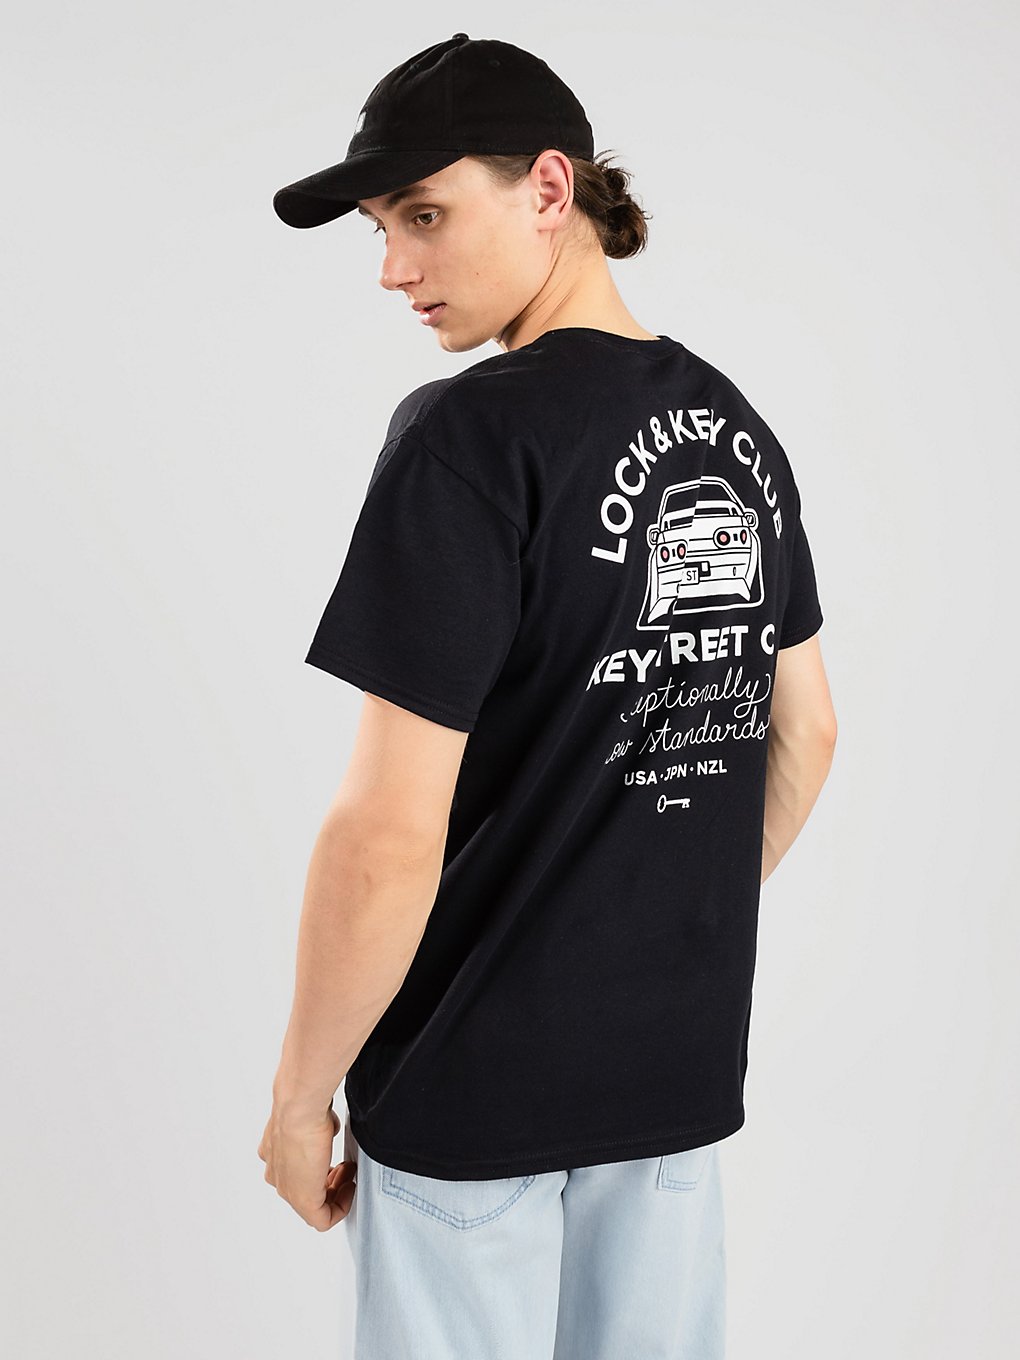 Key Street Car Club T-Shirt black kaufen